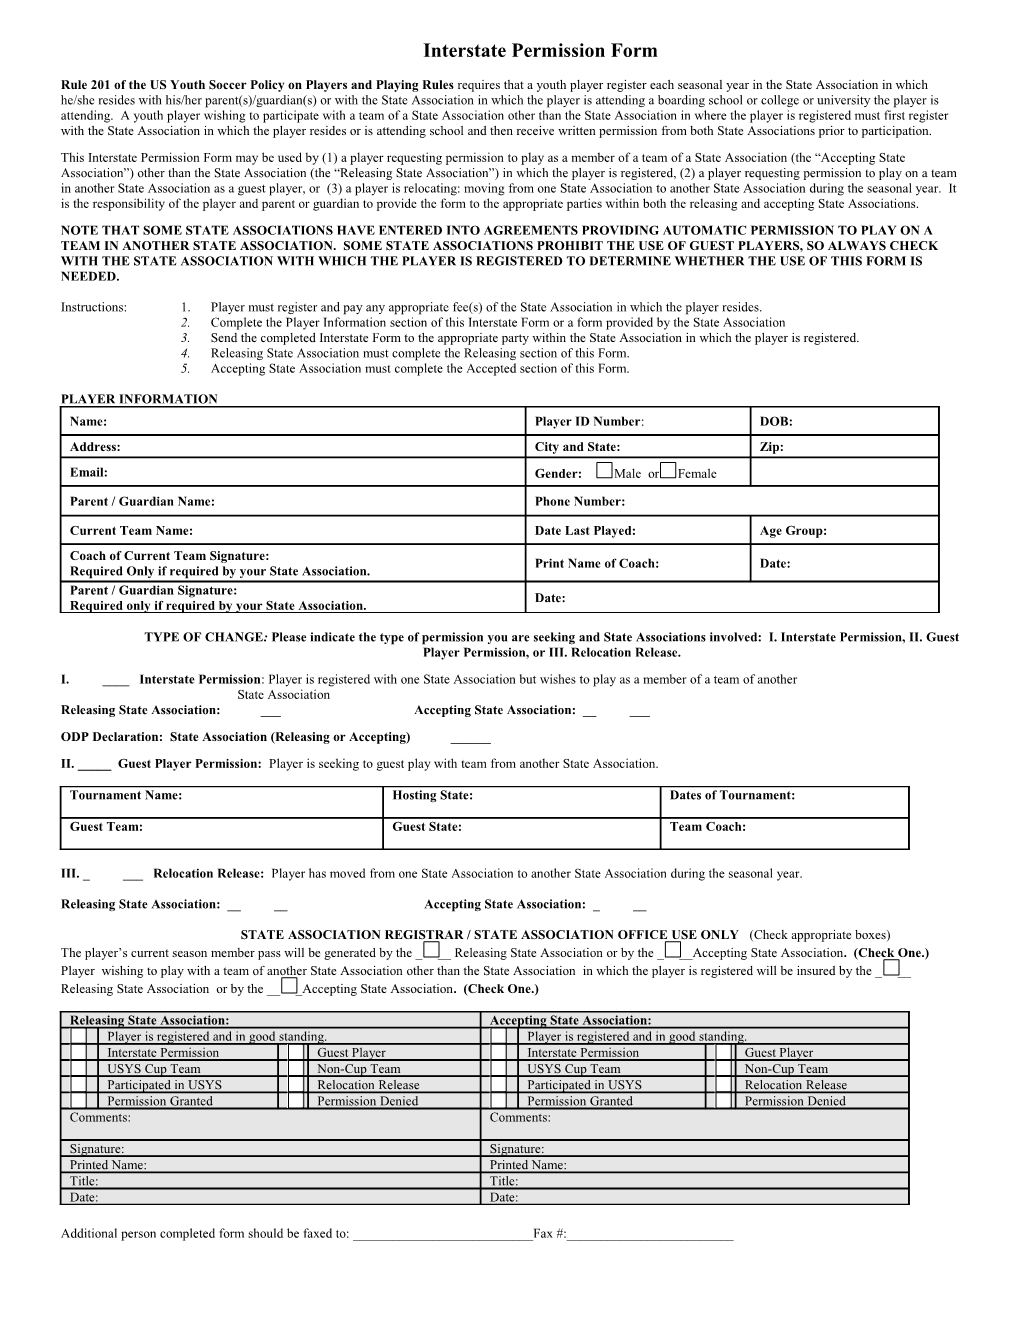 2009- 2010 Interstate USYS Region III Permission Form